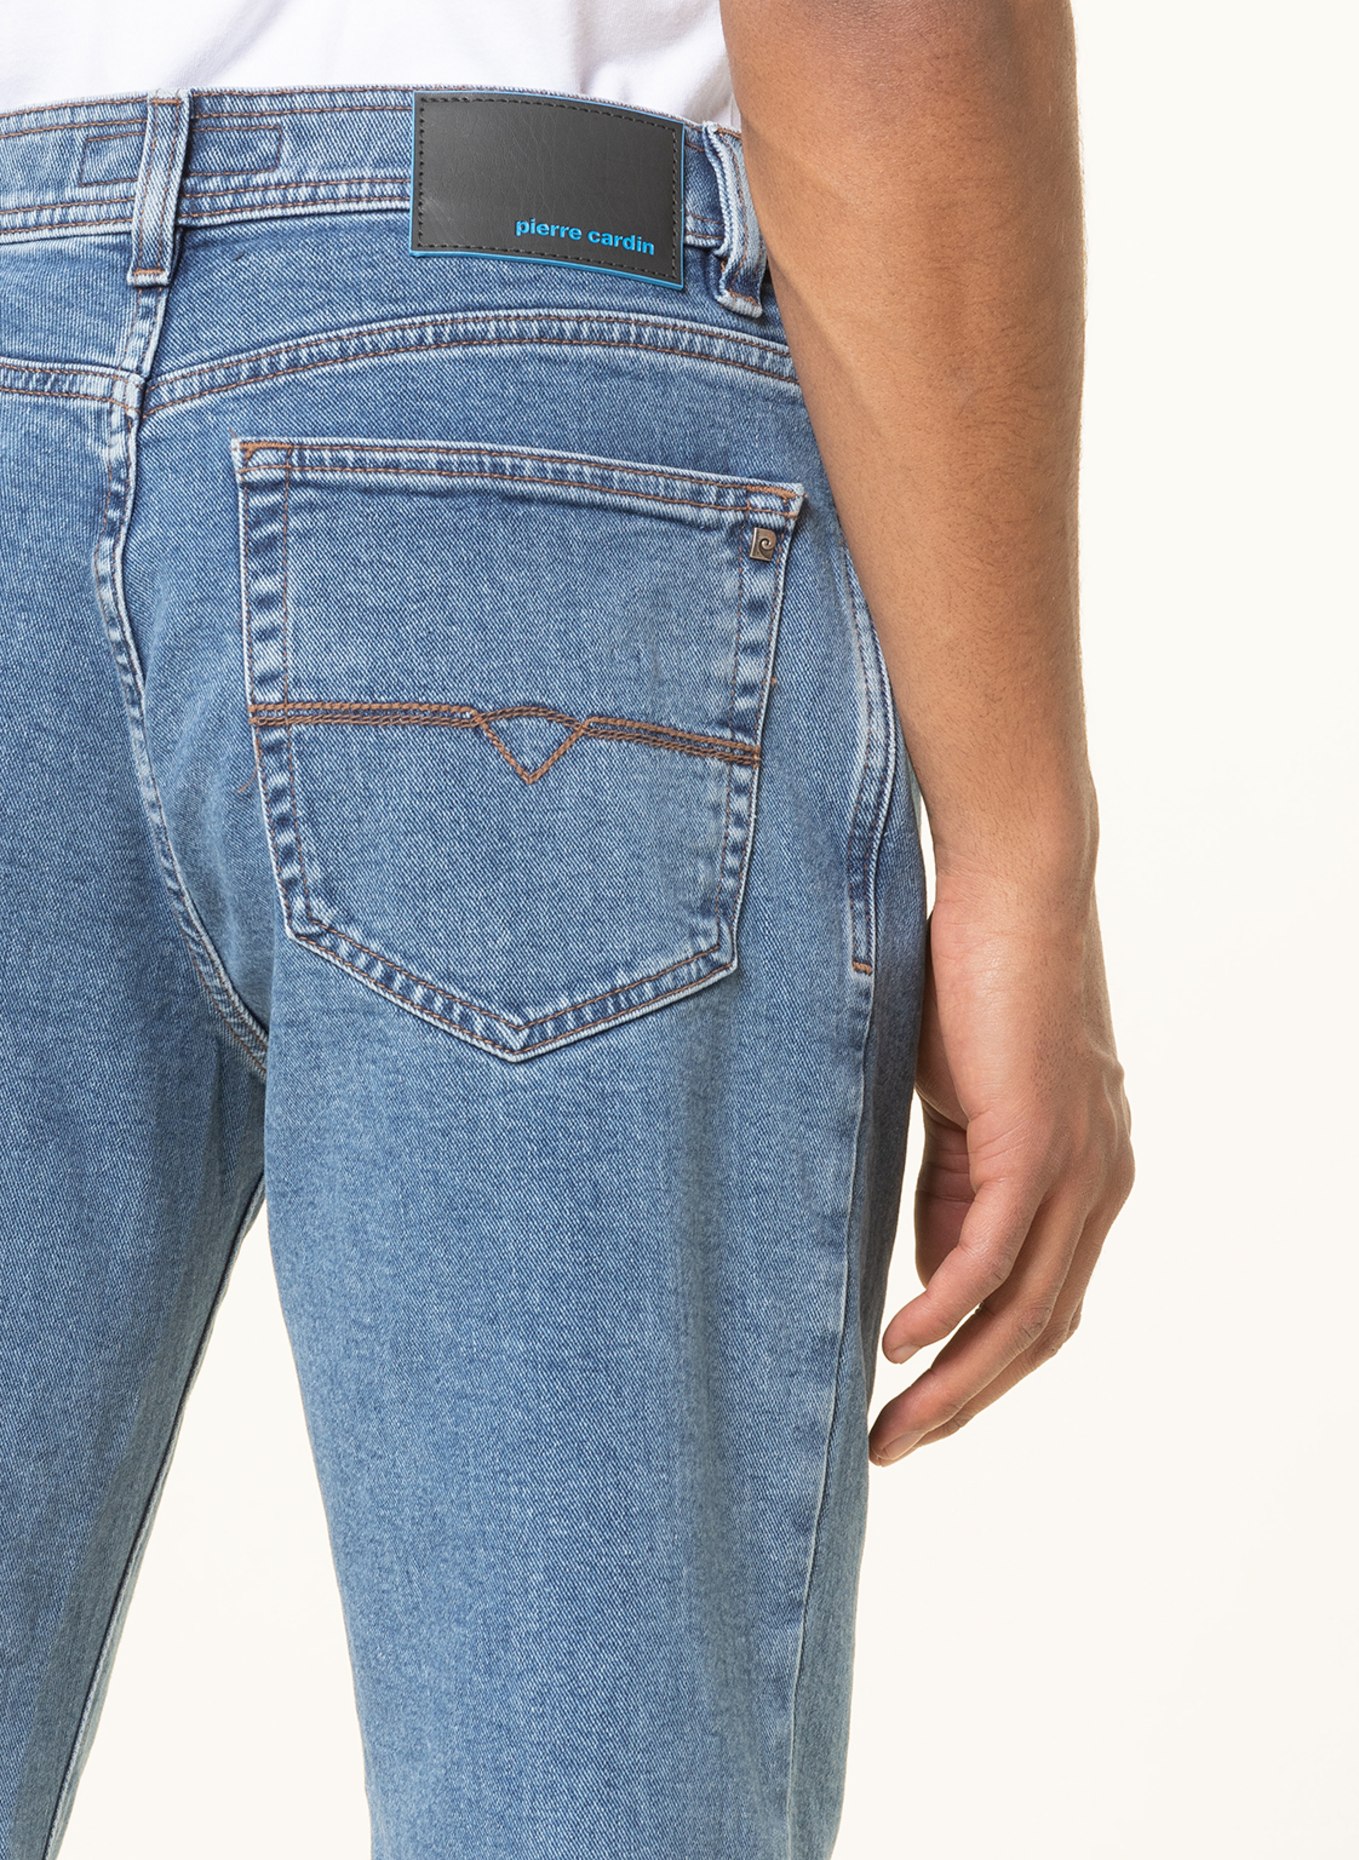 pierre cardin Jeans DIJON Comfort Fit, Farbe: 6812 dark blue used (Bild 5)